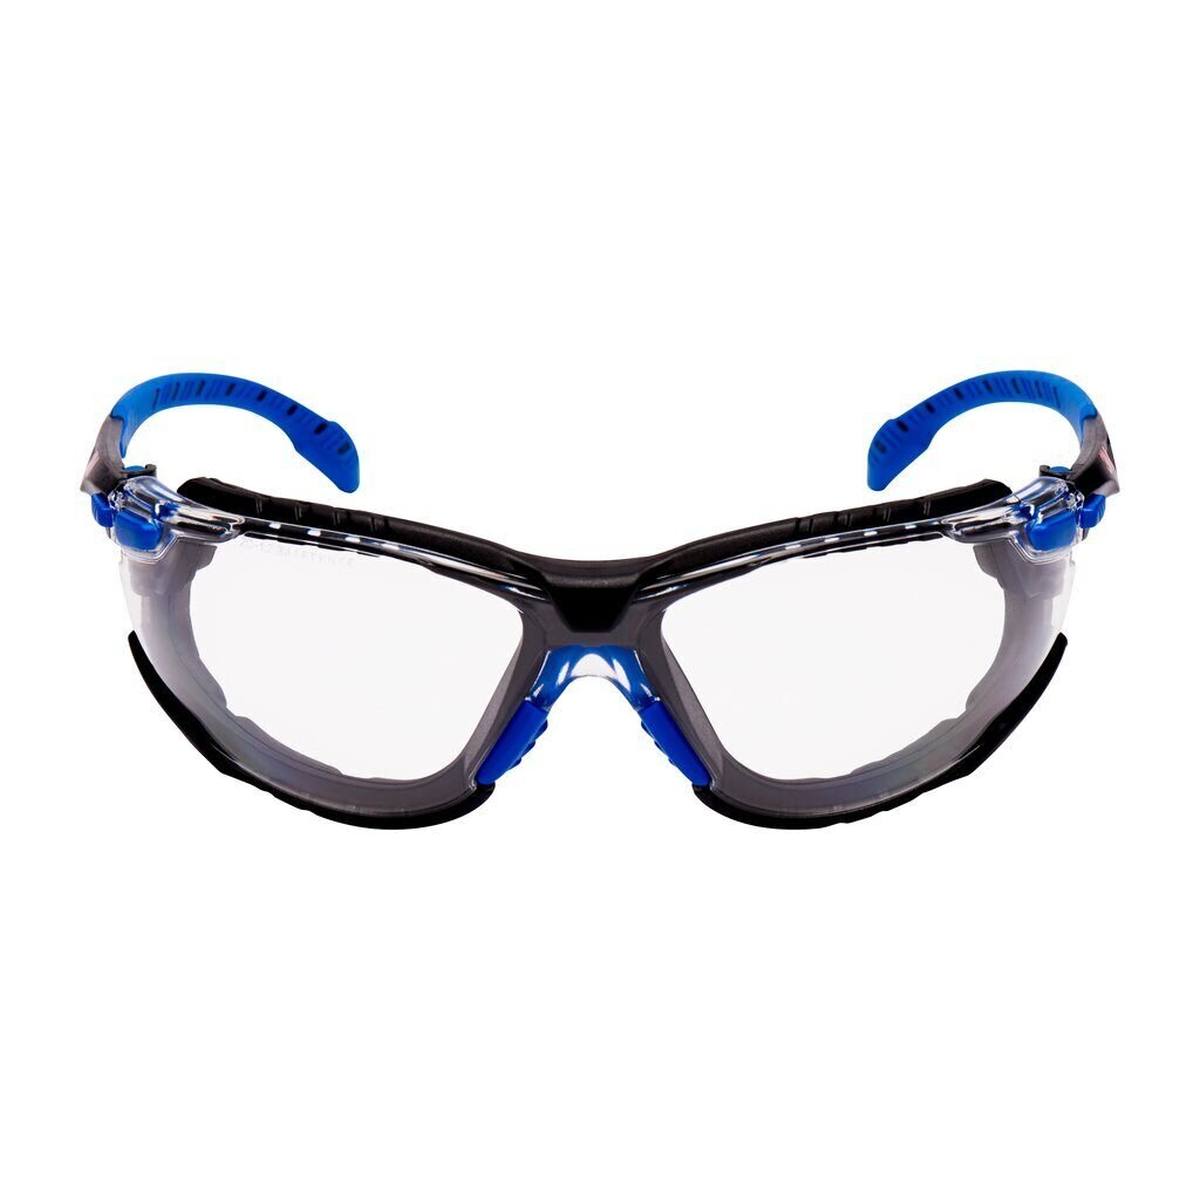 occhiali di sicurezza 3M Solus 1000, aste blu/nere, rivestimento Scotchgard antiappannamento/antigraffio (K&amp;N), lenti chiare, montatura e fascia in schiuma, S1101SGAFKT-EU